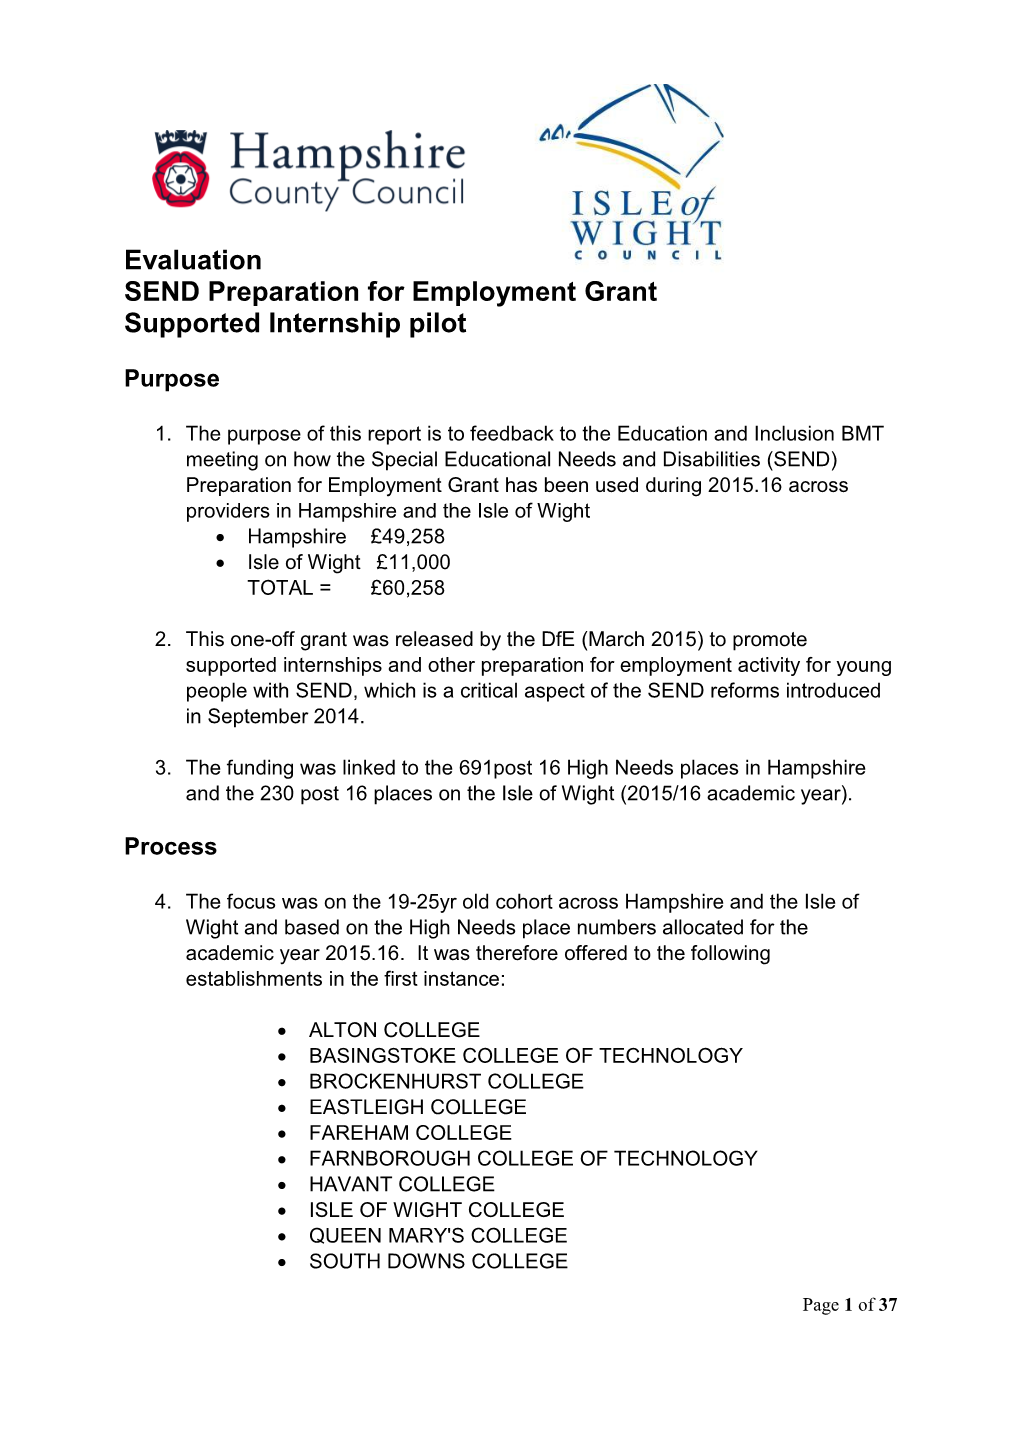 Evaluation SEND Preparation for Employment Grant Supported Internship Pilot